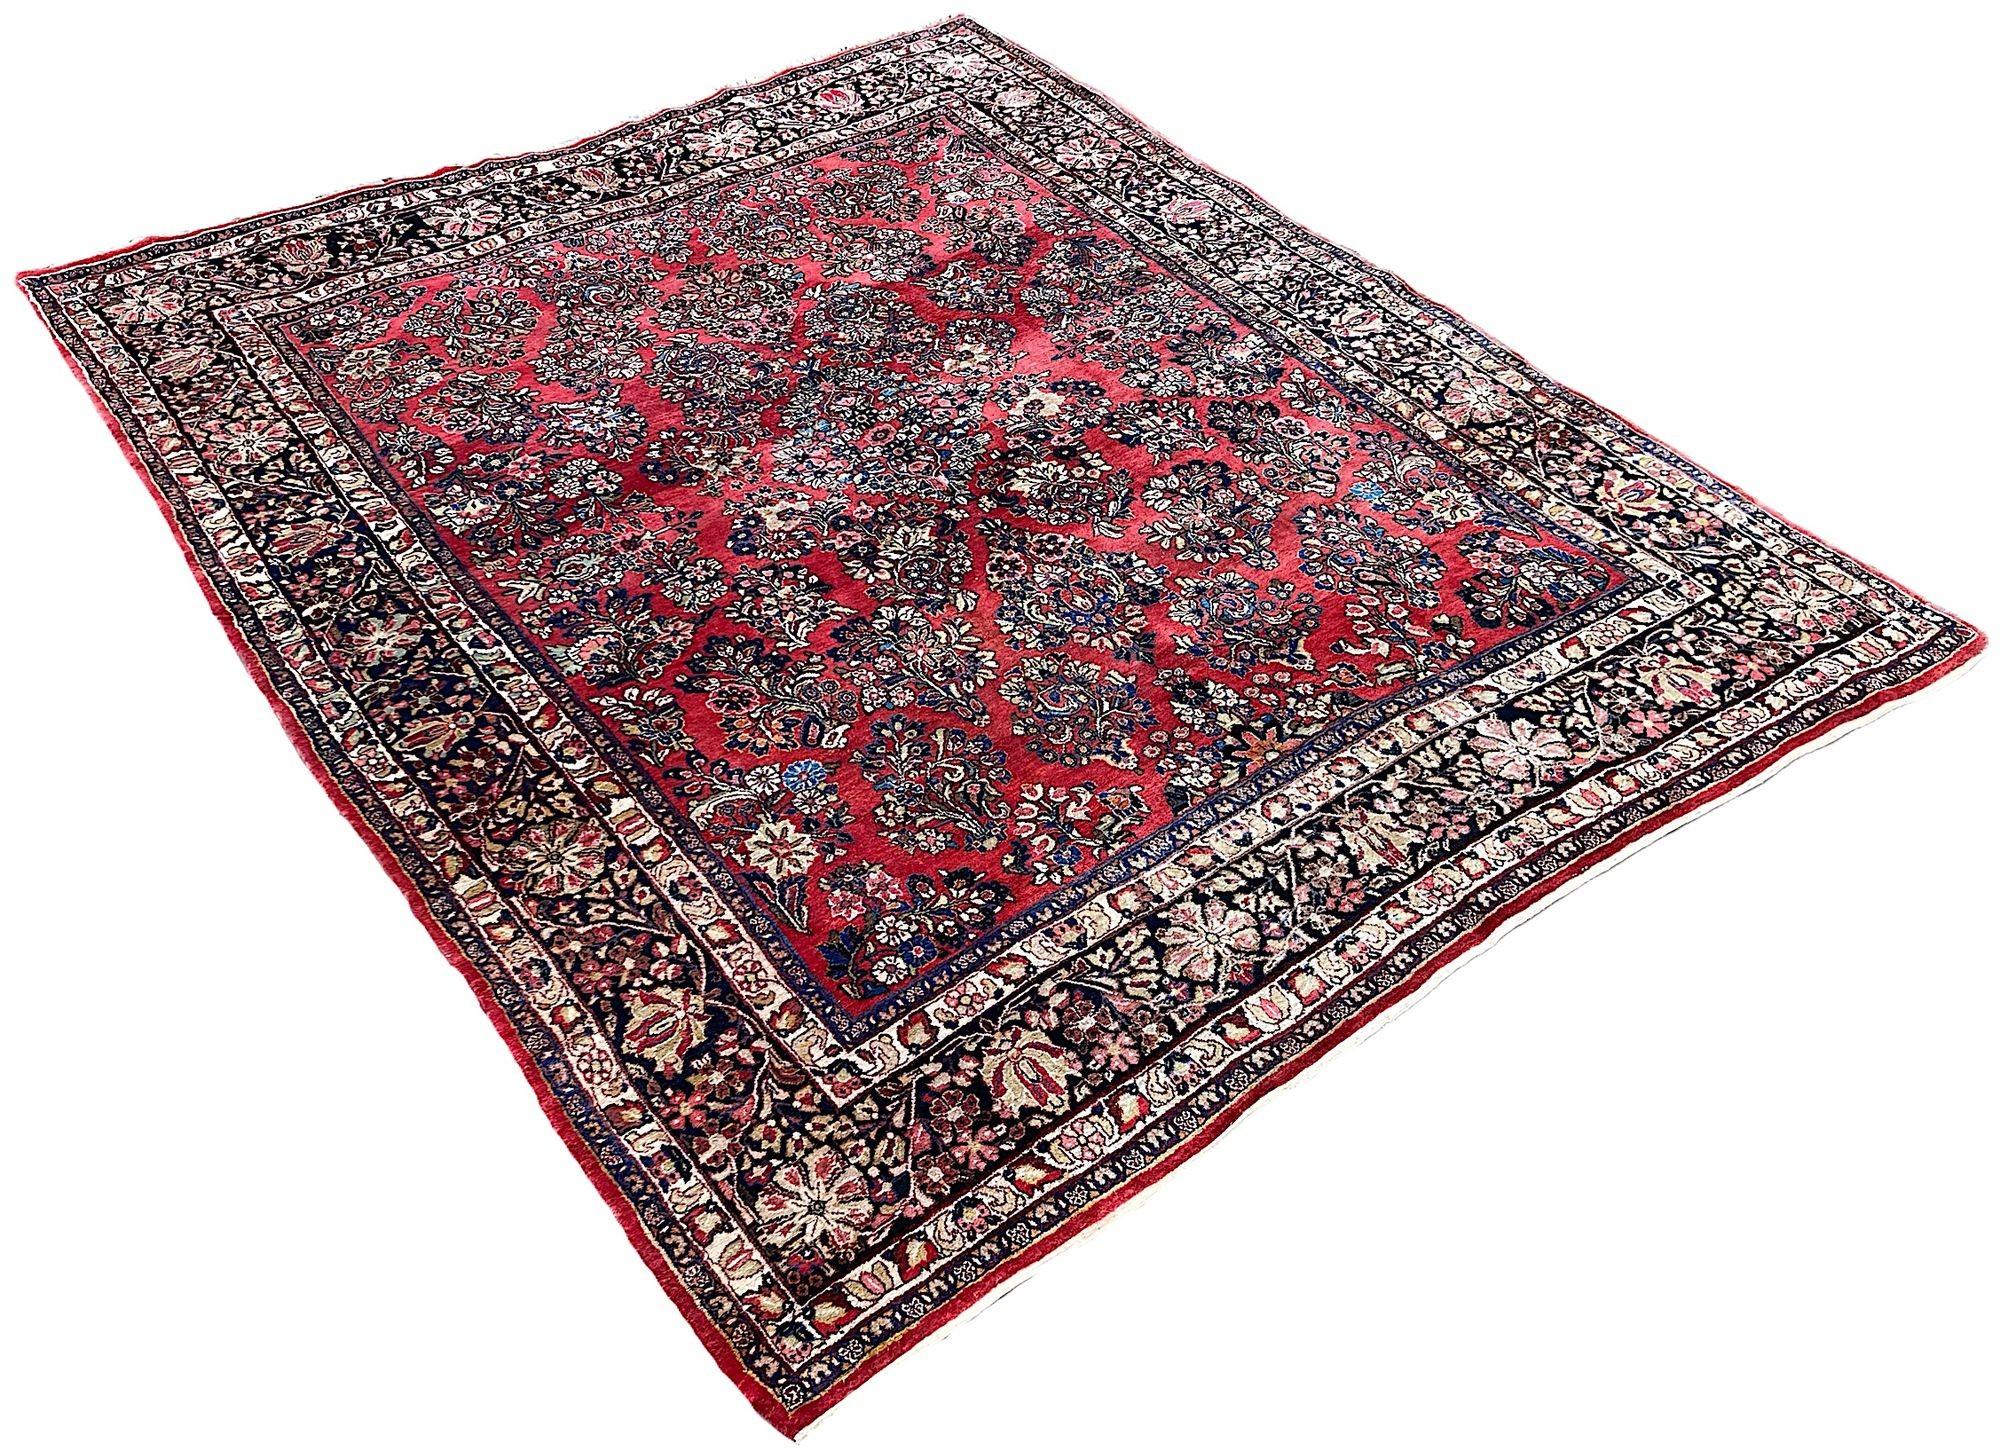 Antique Sarouk Carpet 3.07m x 2.45m In Good Condition For Sale In St. Albans, GB